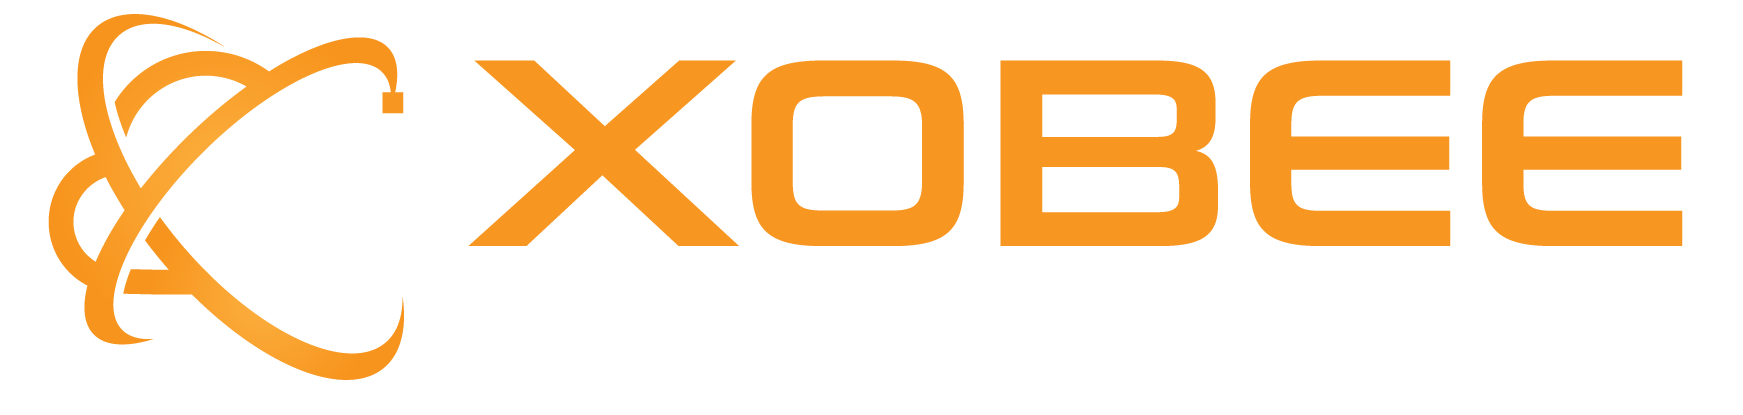 Xobee Networks Logo